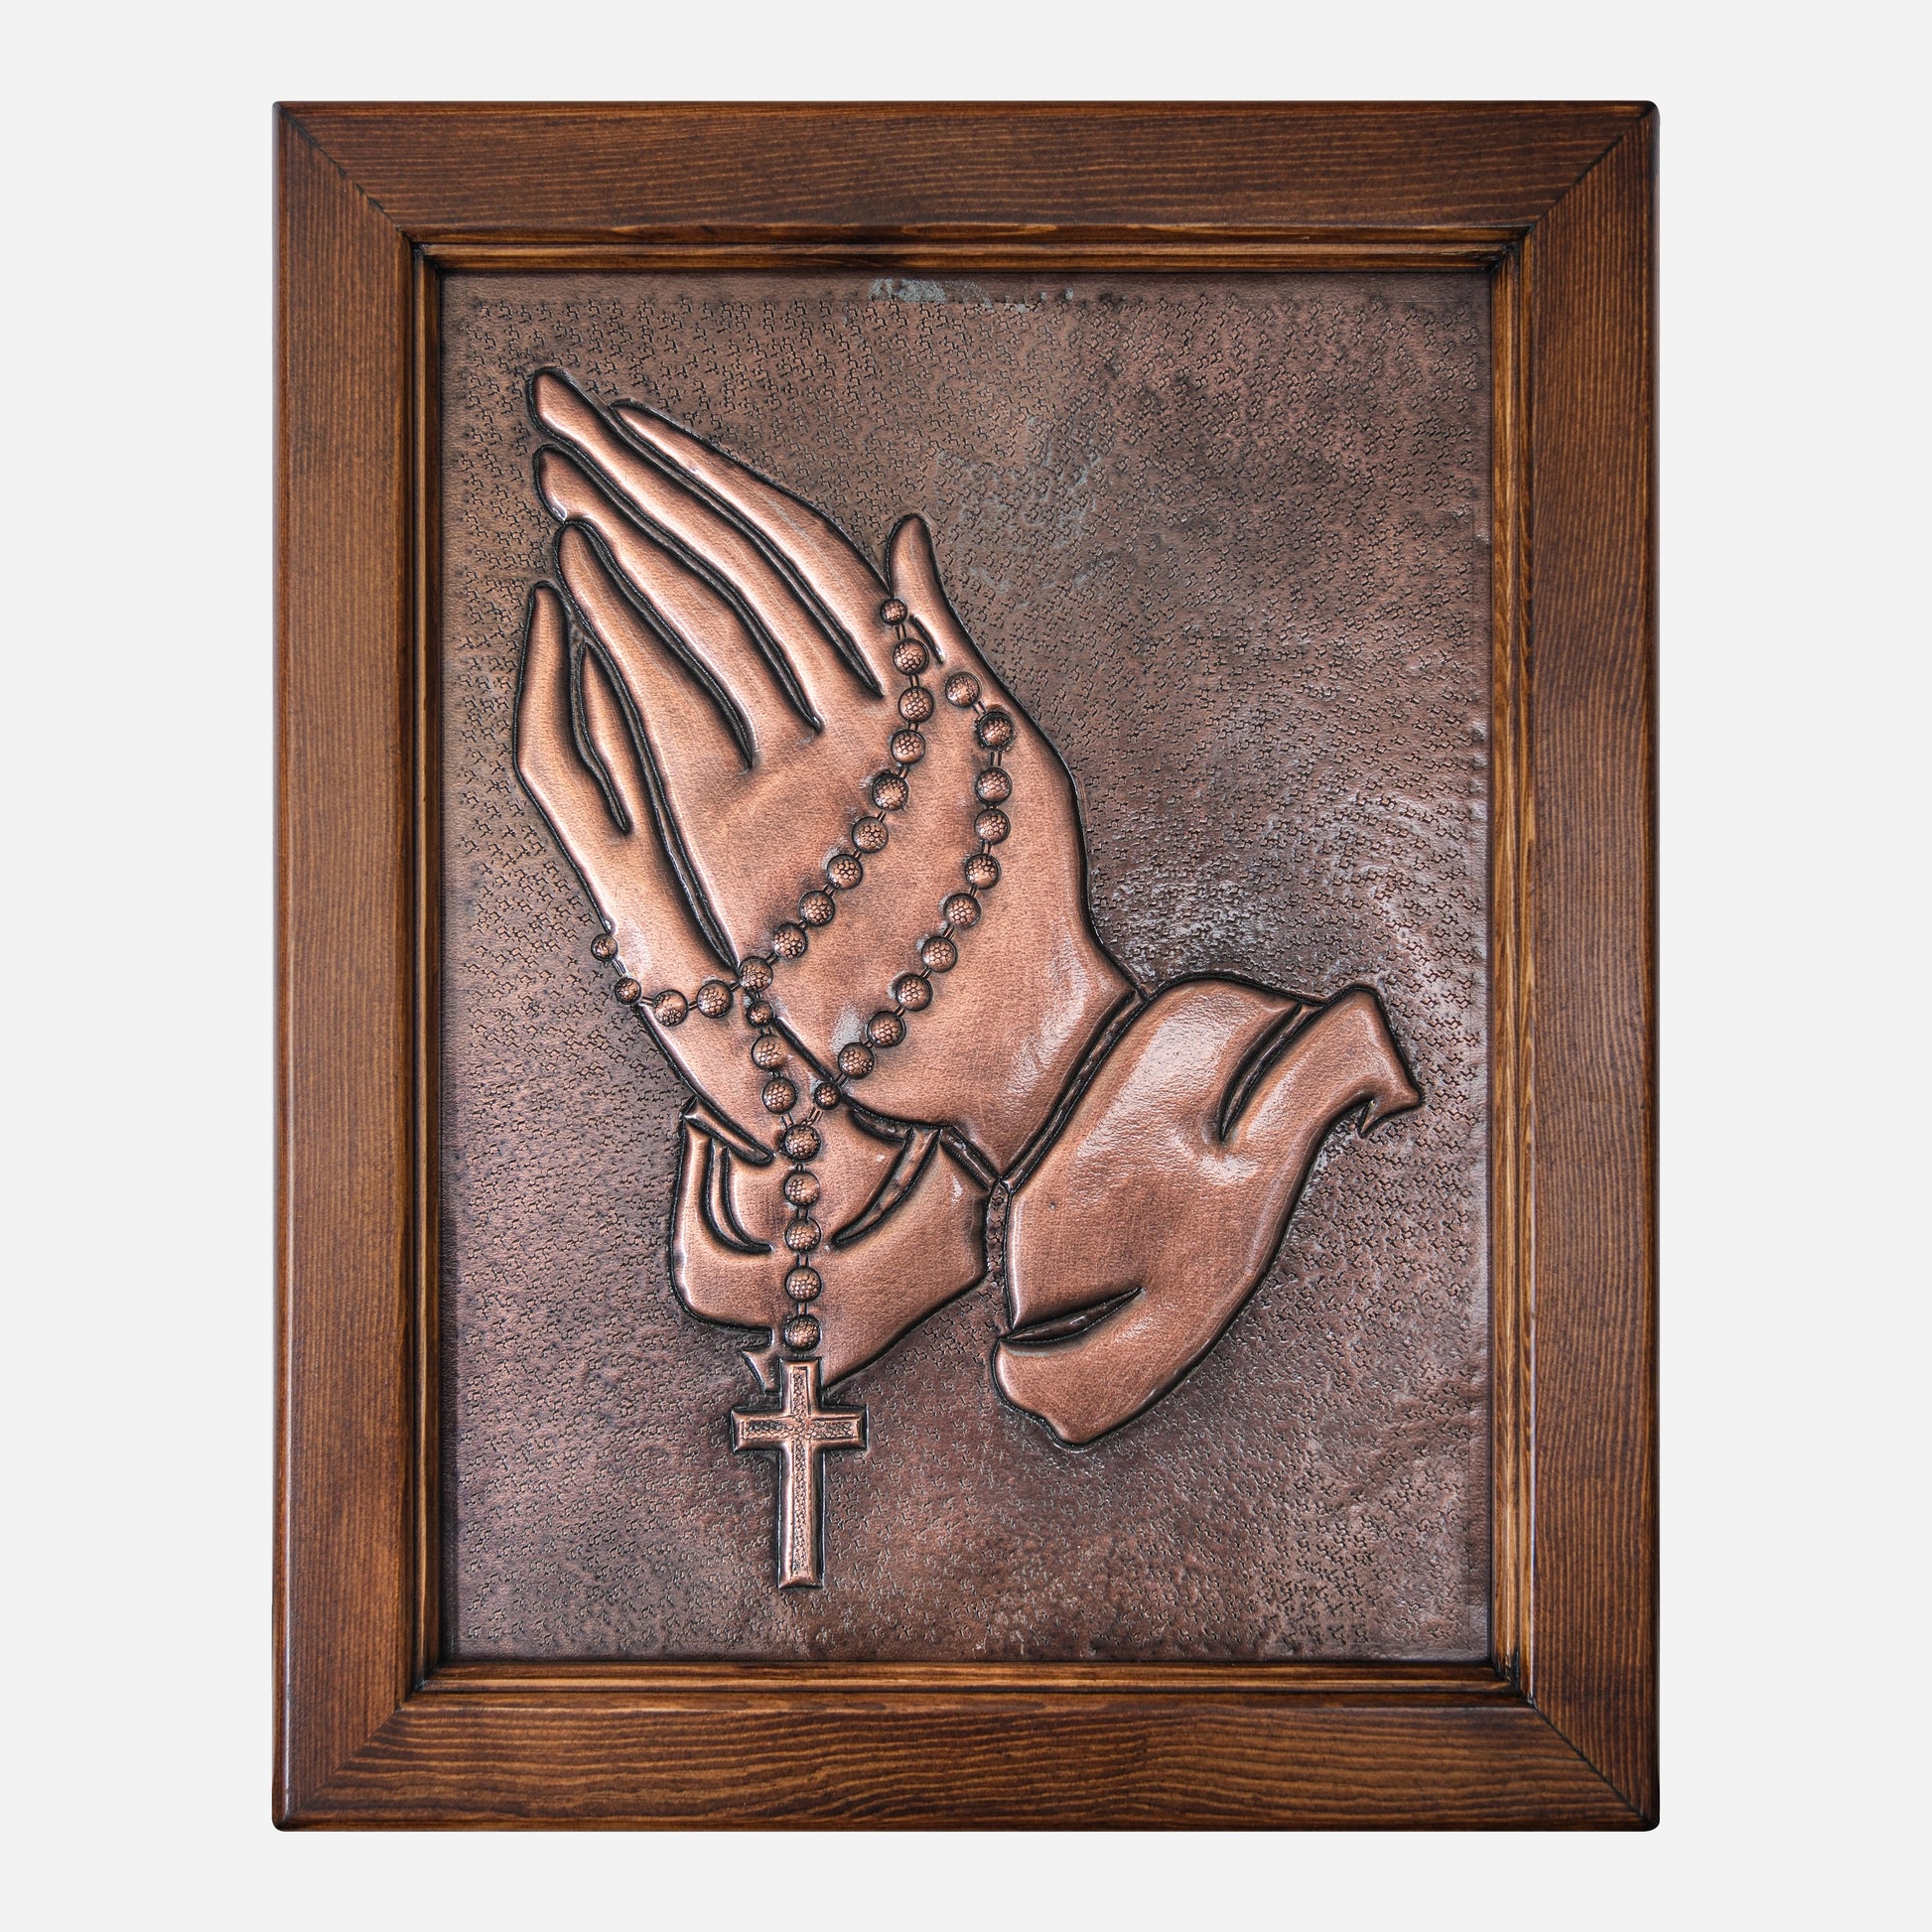 Framed Copper Artwork (Praying Hands)